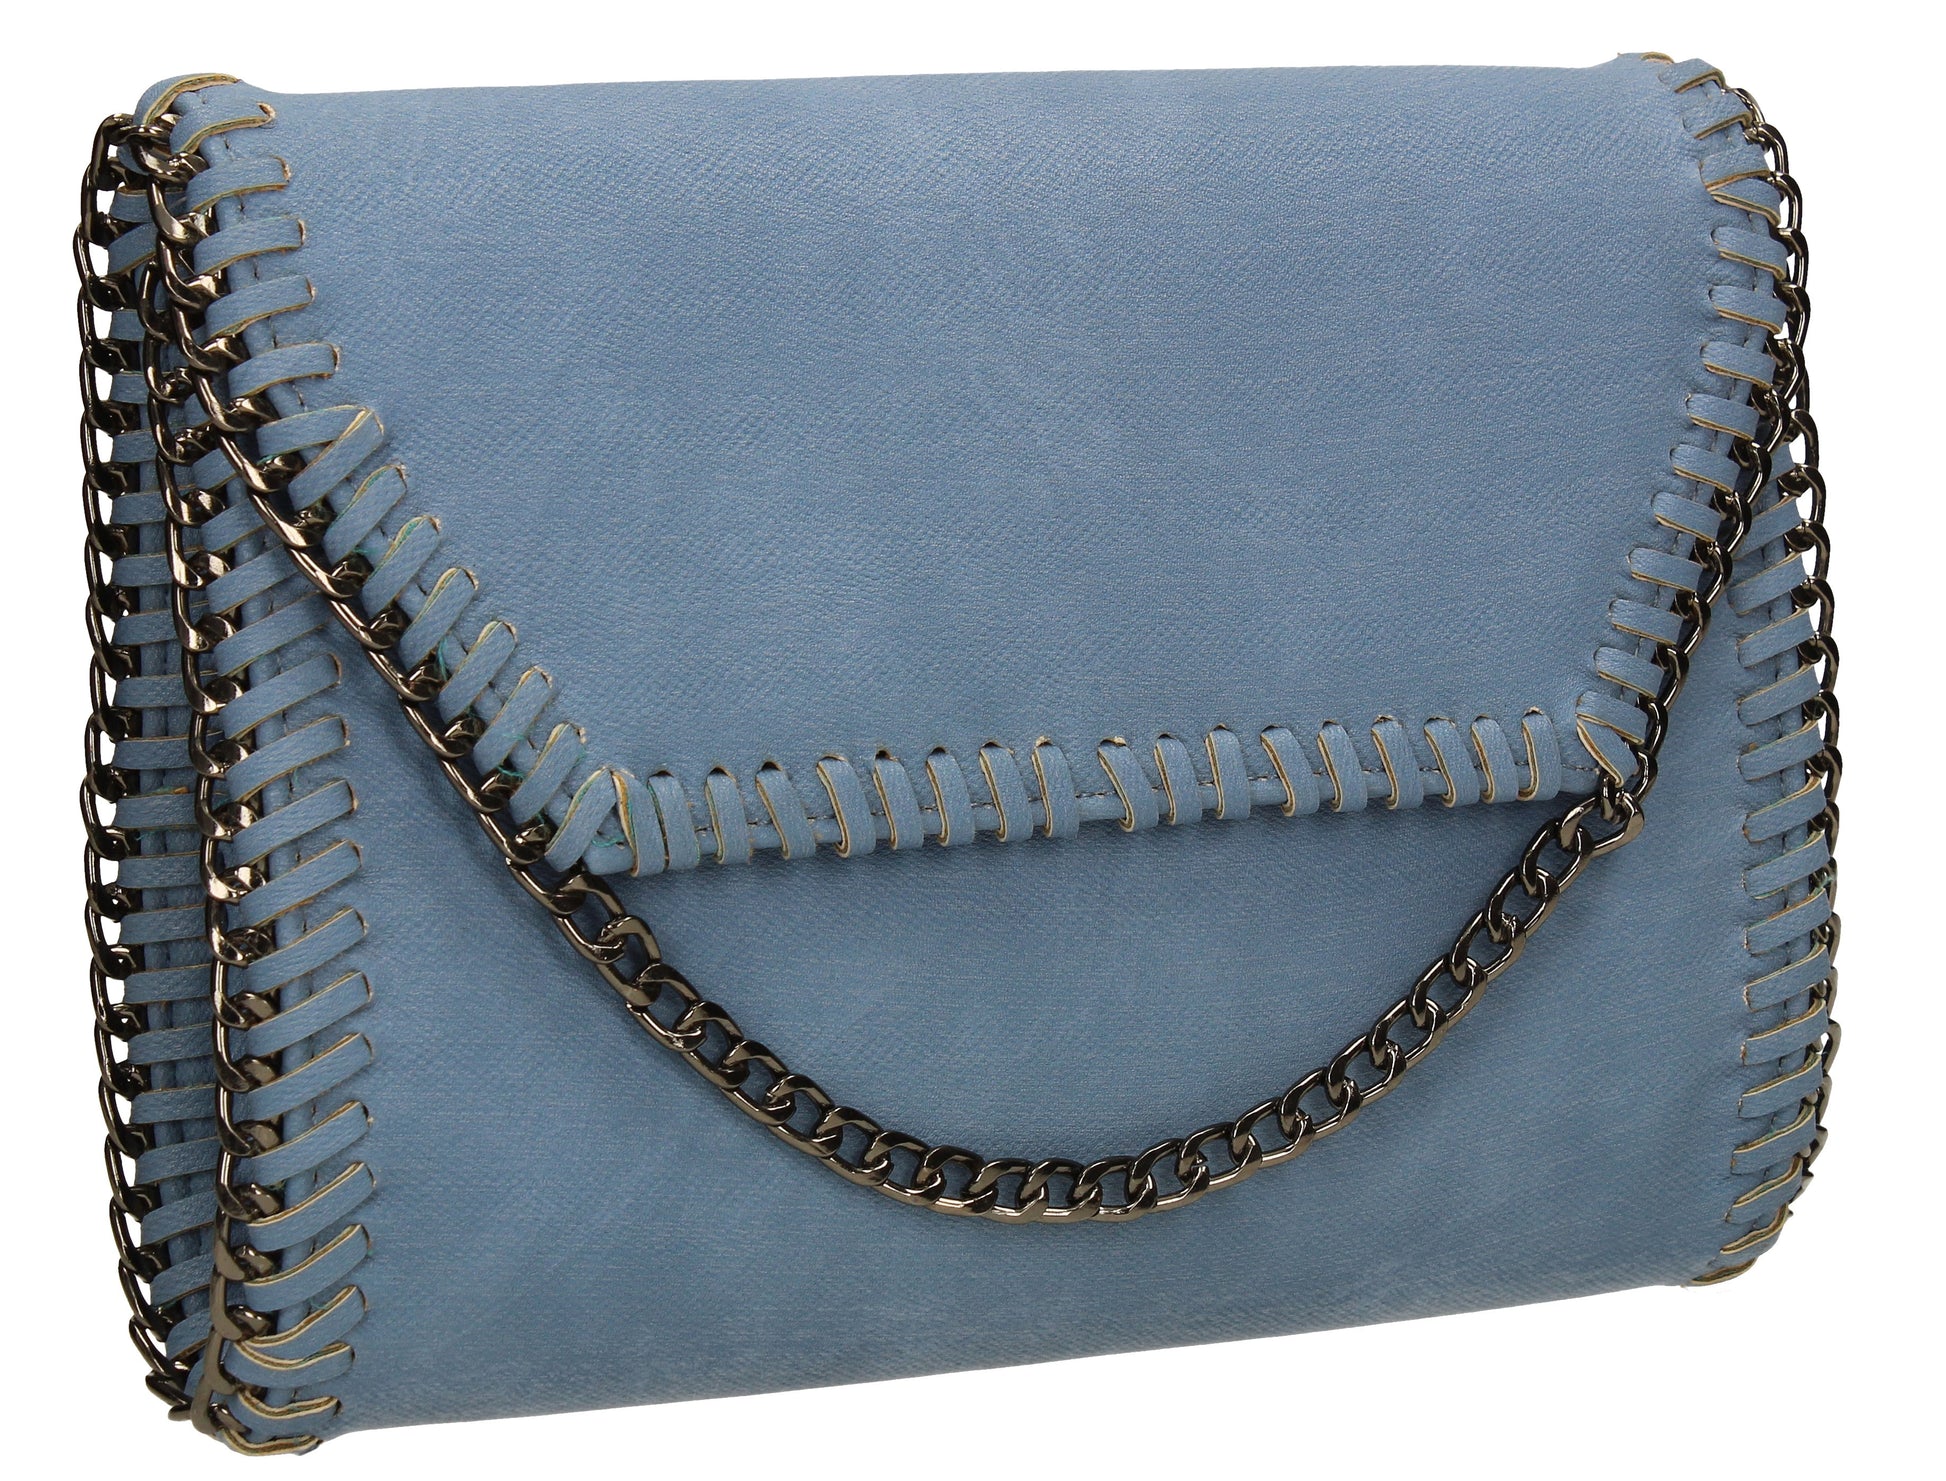 SWANKYSWANS Winona Clutch Bag Blue Cute Cheap Clutch Bag For Weddings School and Work